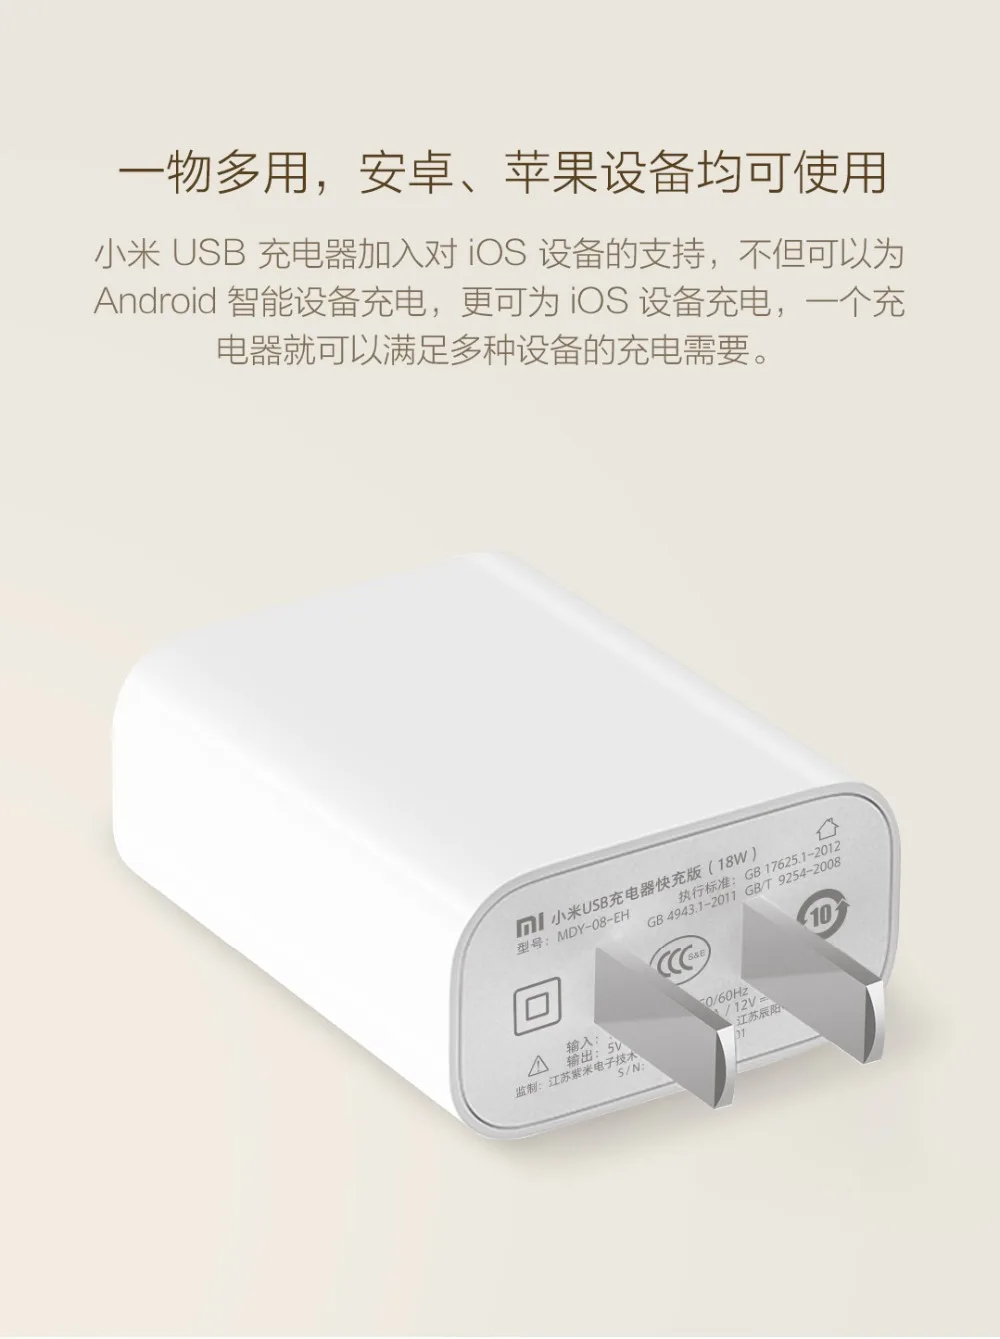 Xiaomi Usb 18w Quick Charge